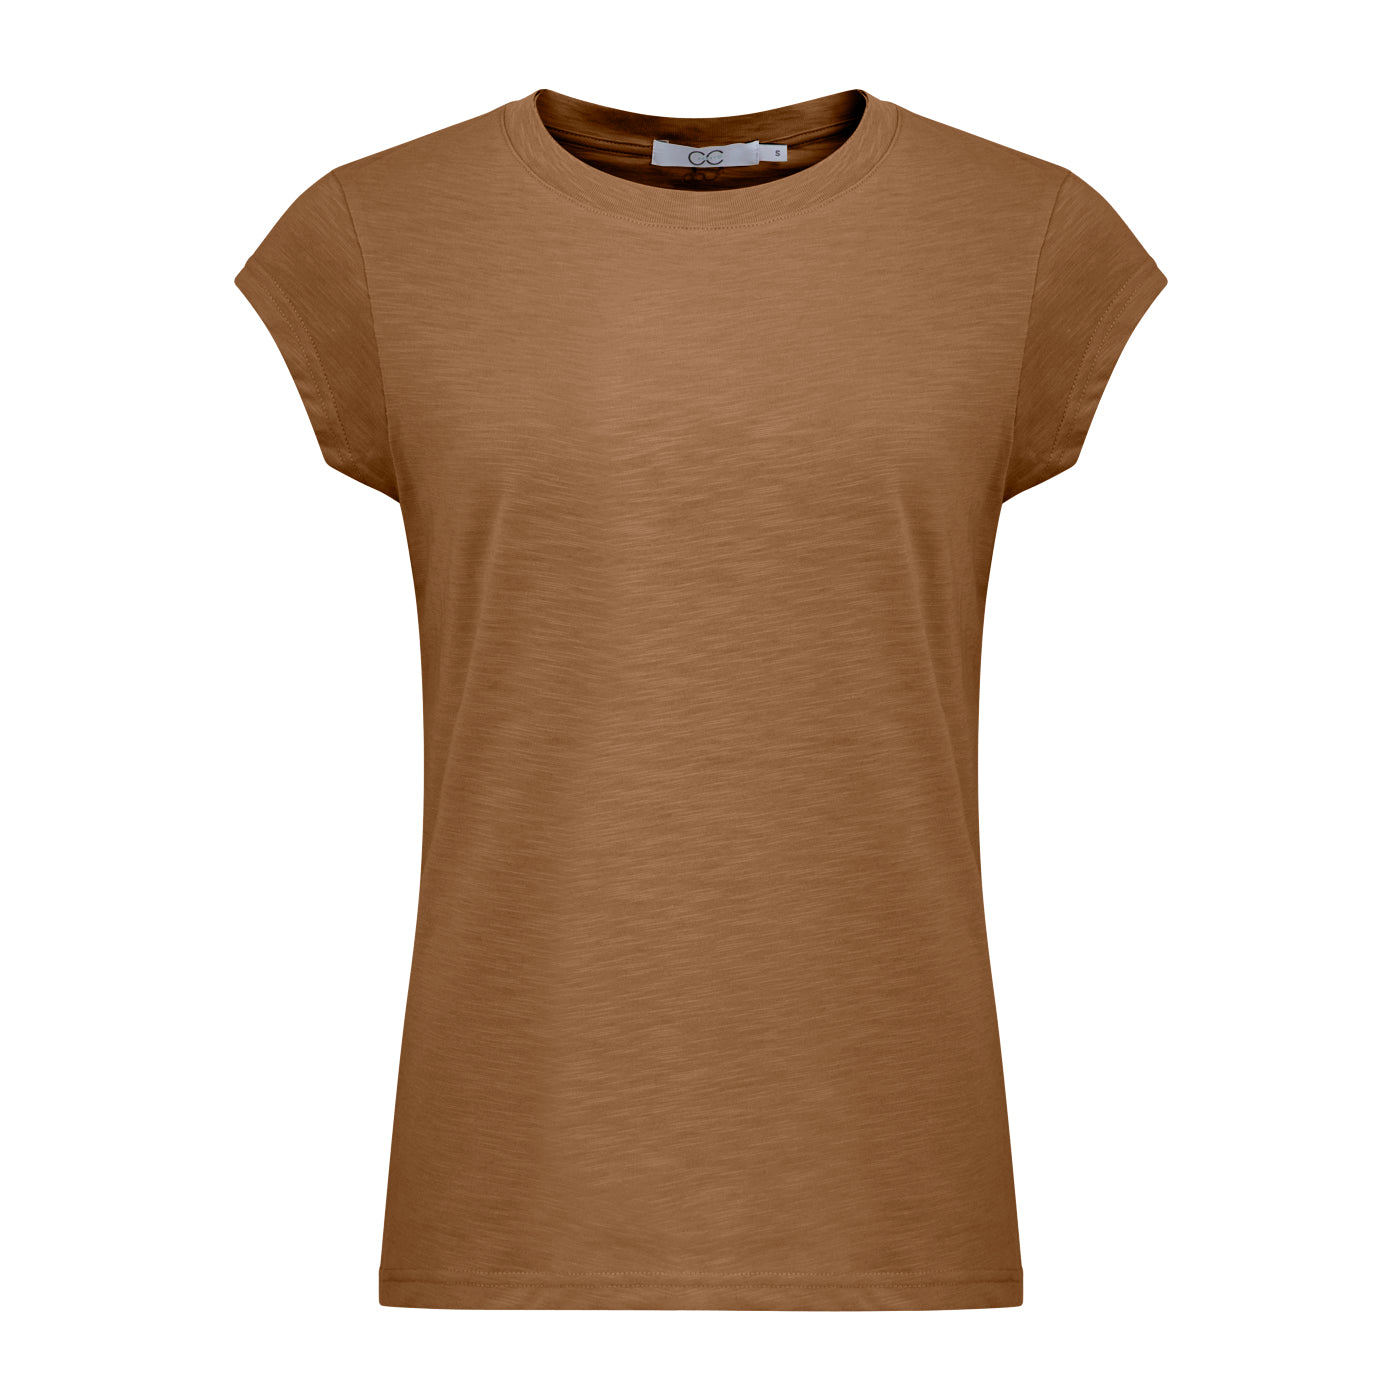 CC Heart Basic T-Shirt Caramel